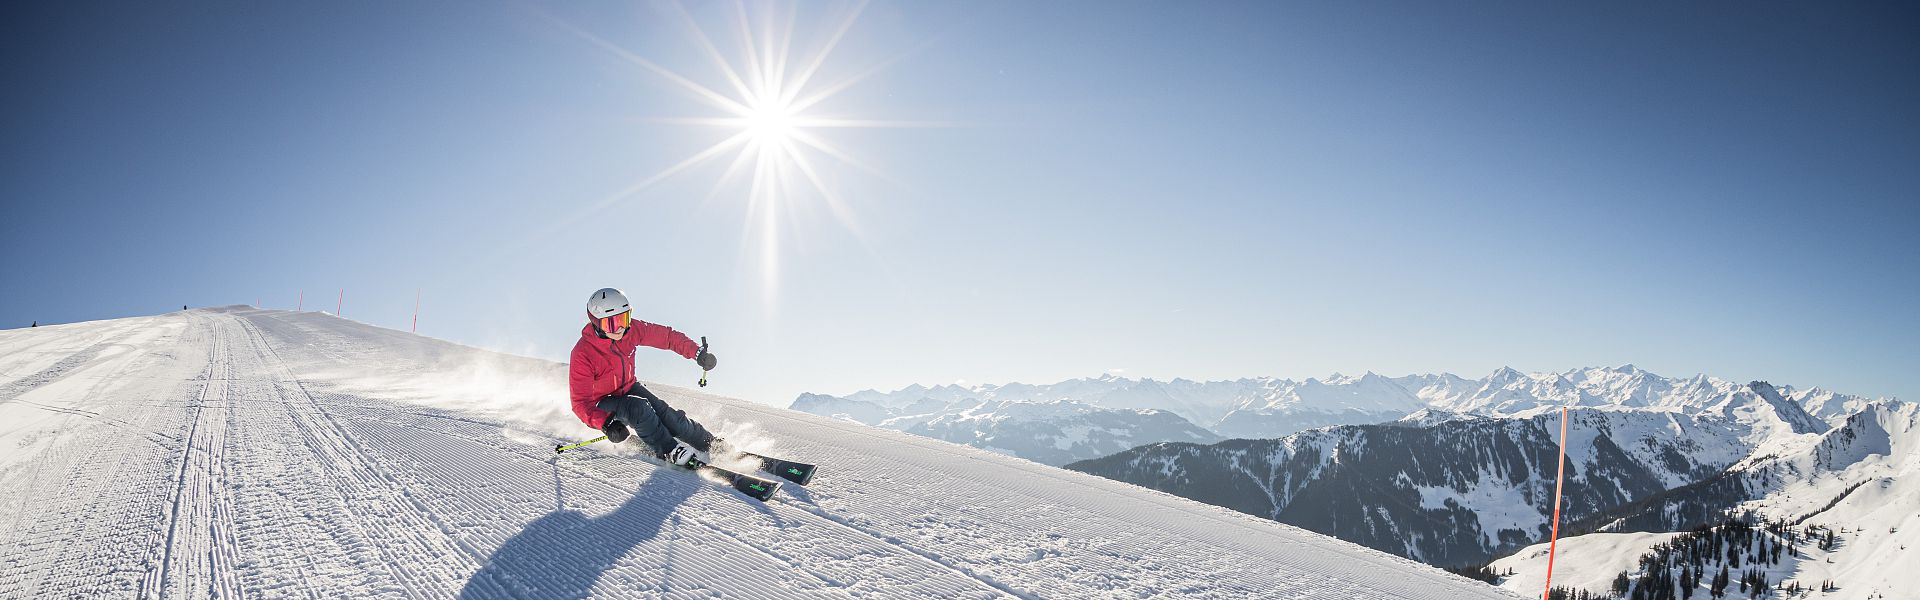 Skifahren (c) TVB Kitzbüheler Alpen-Brixental, Fotografin Mirja Geh (63)